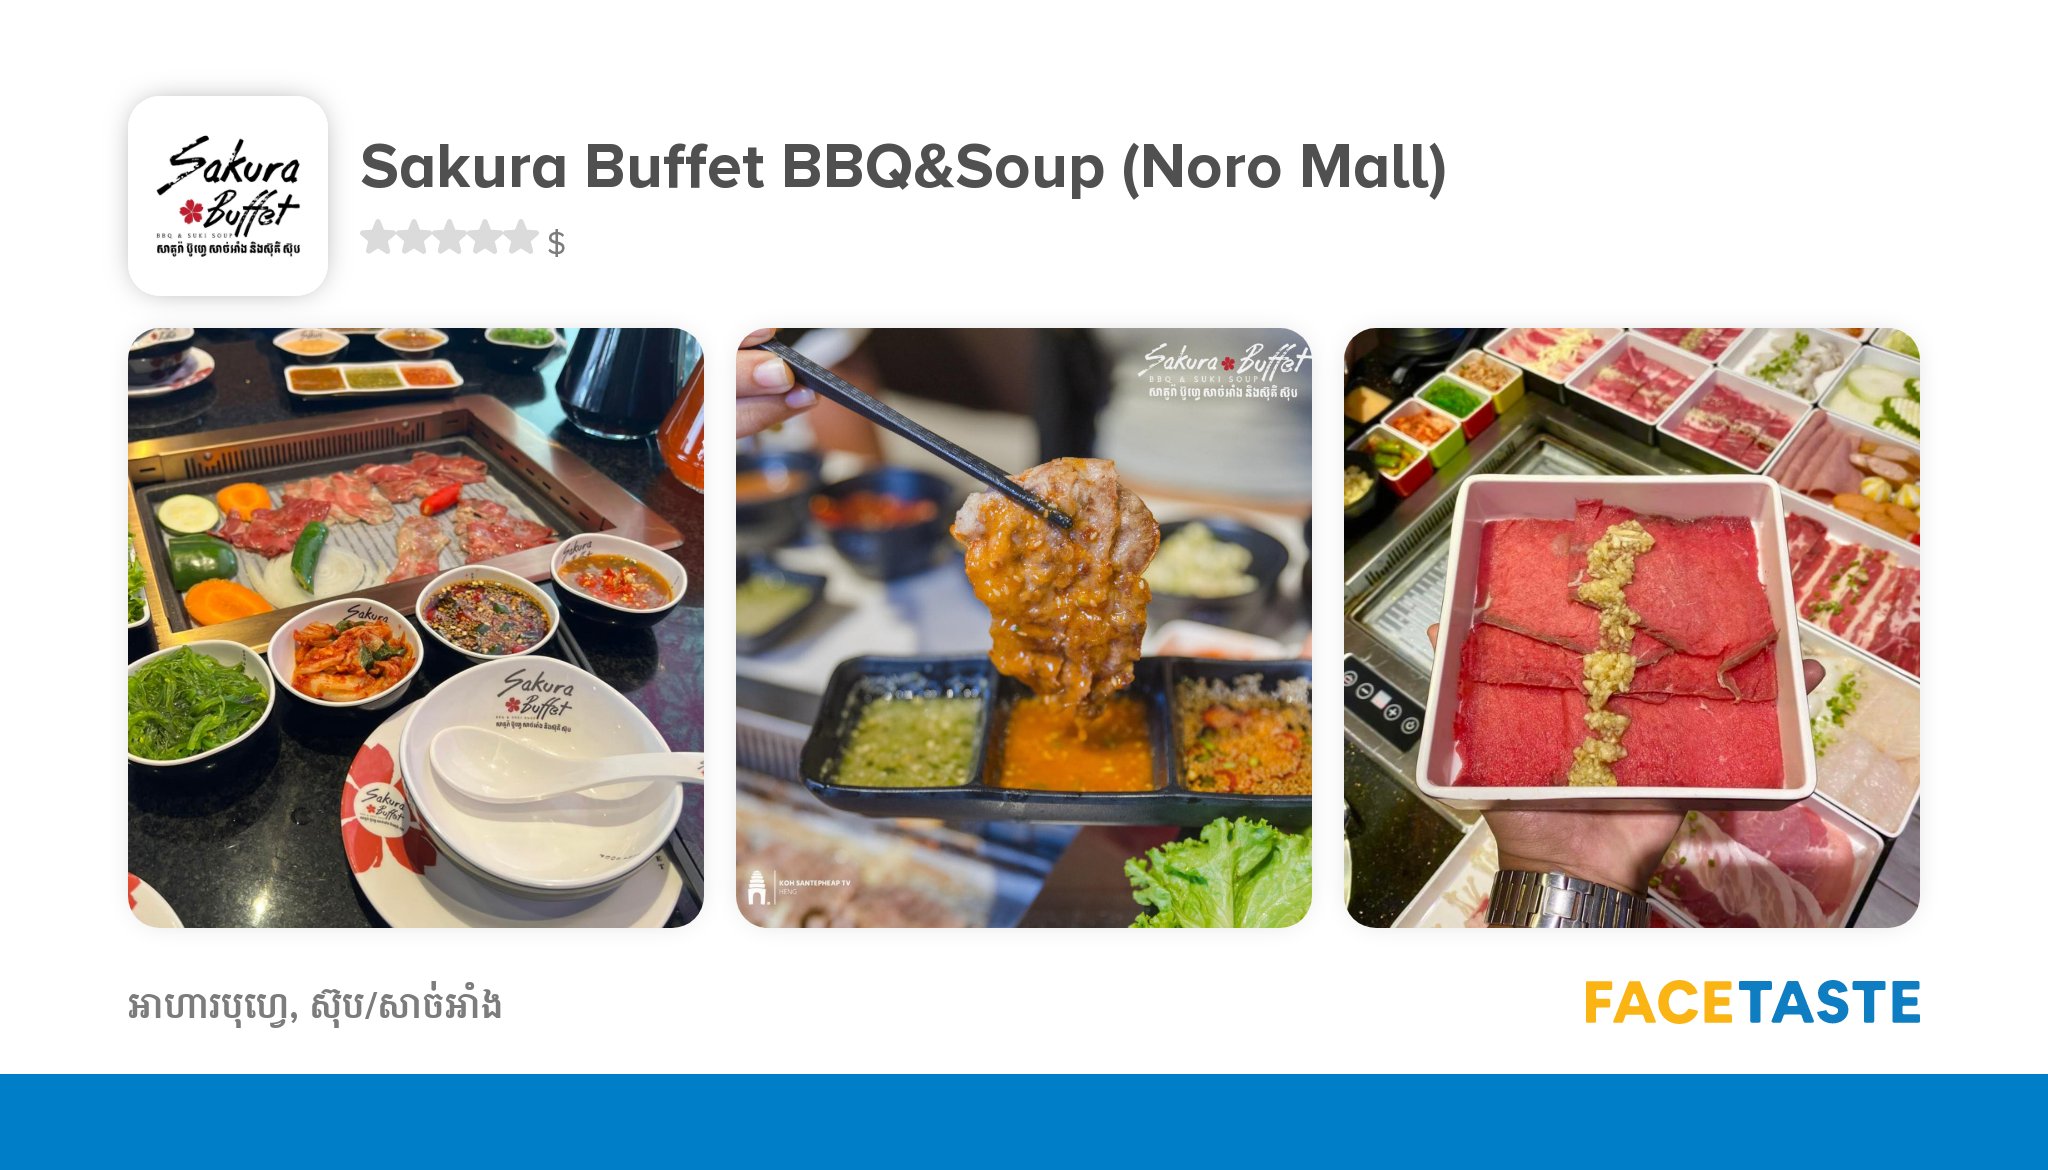 Sakura Buffet BBQ&Soup (Noro Mall)